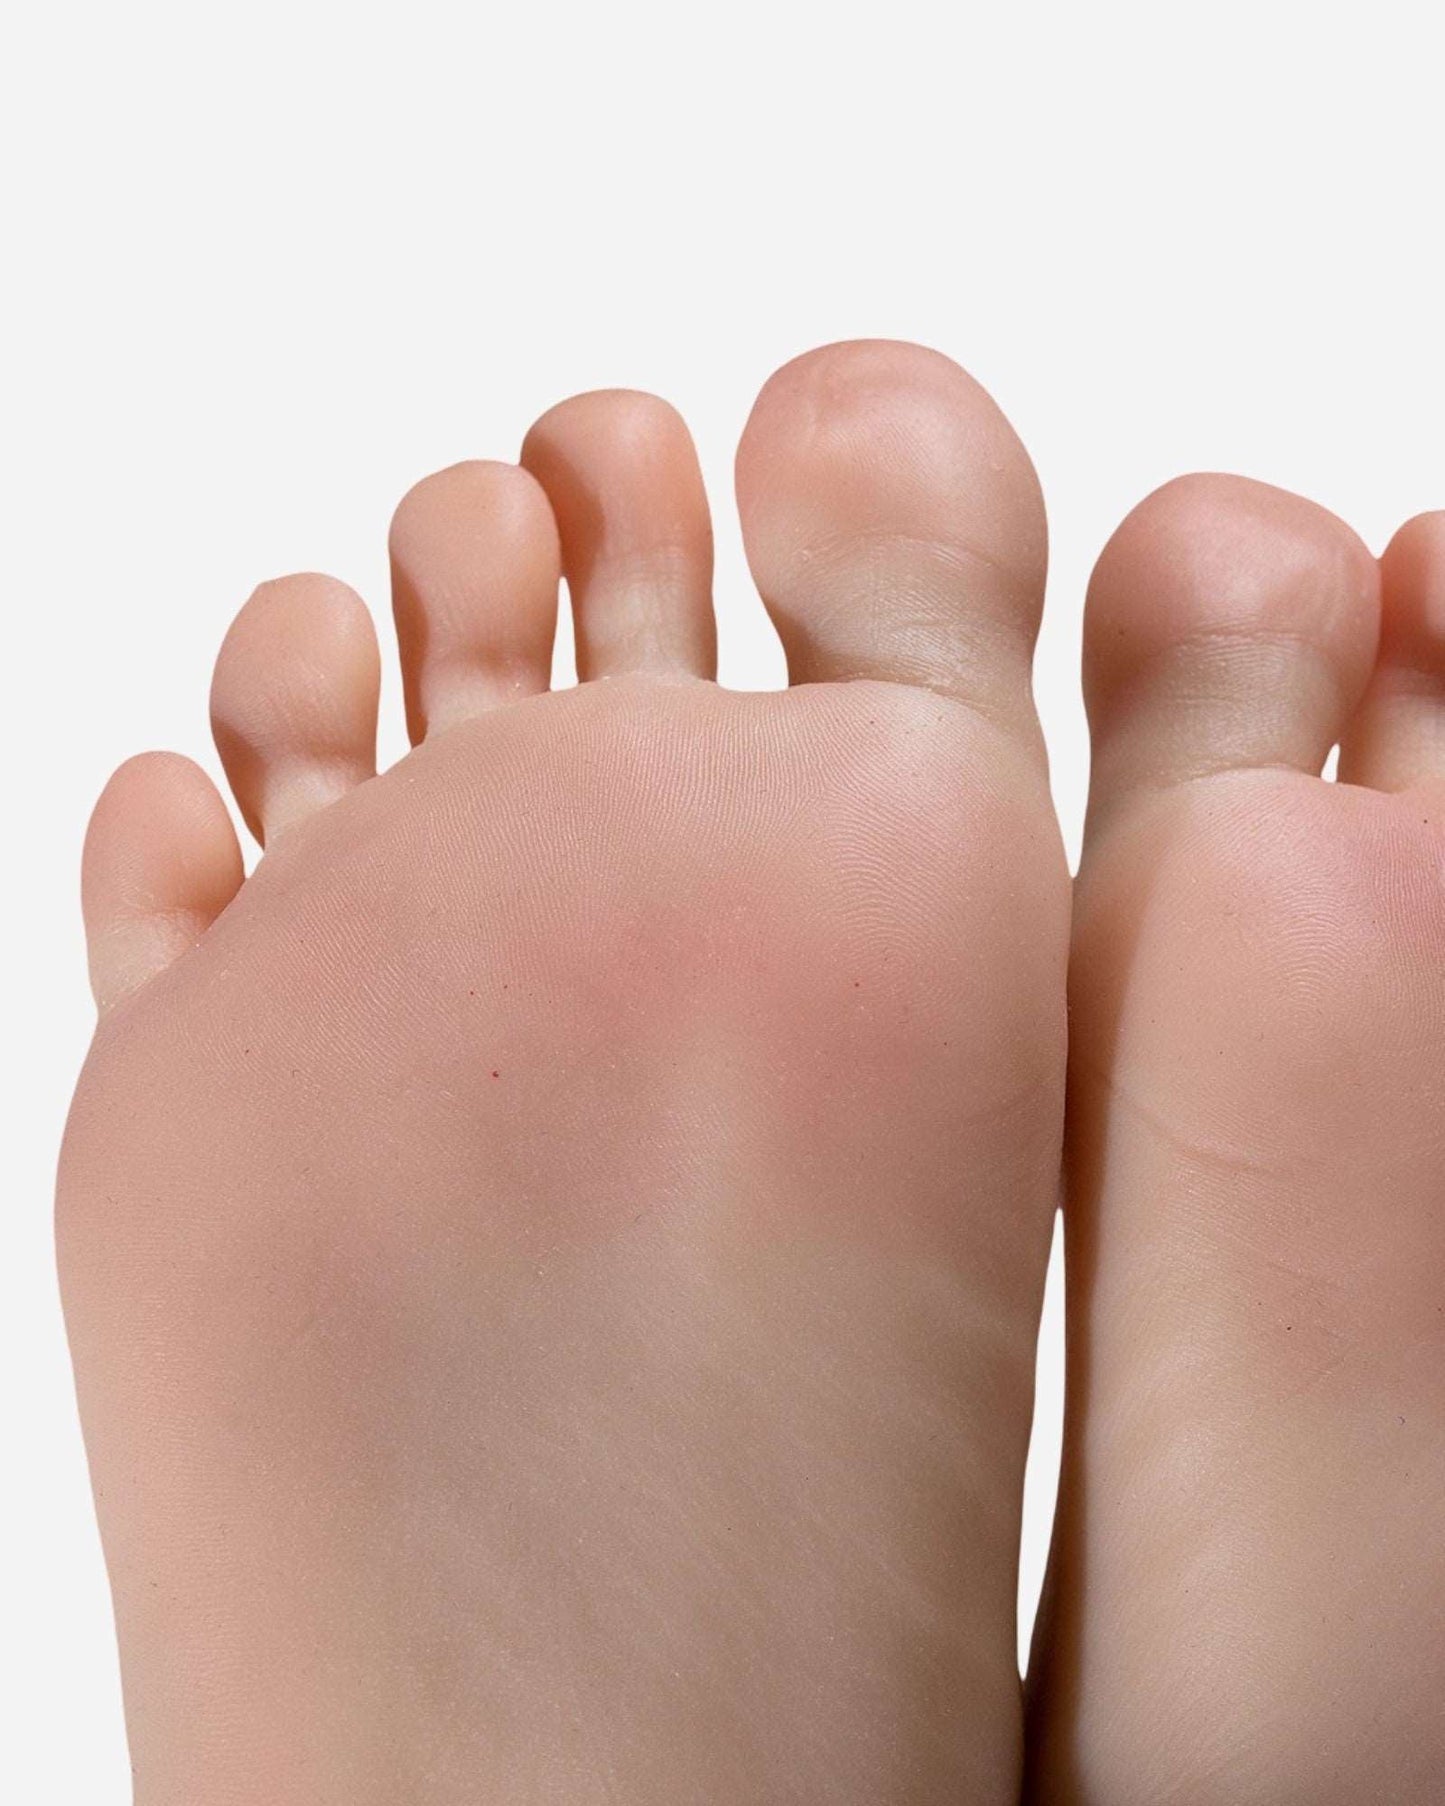 0 Super Realistic Silicone Foot Fetish Girl Feet